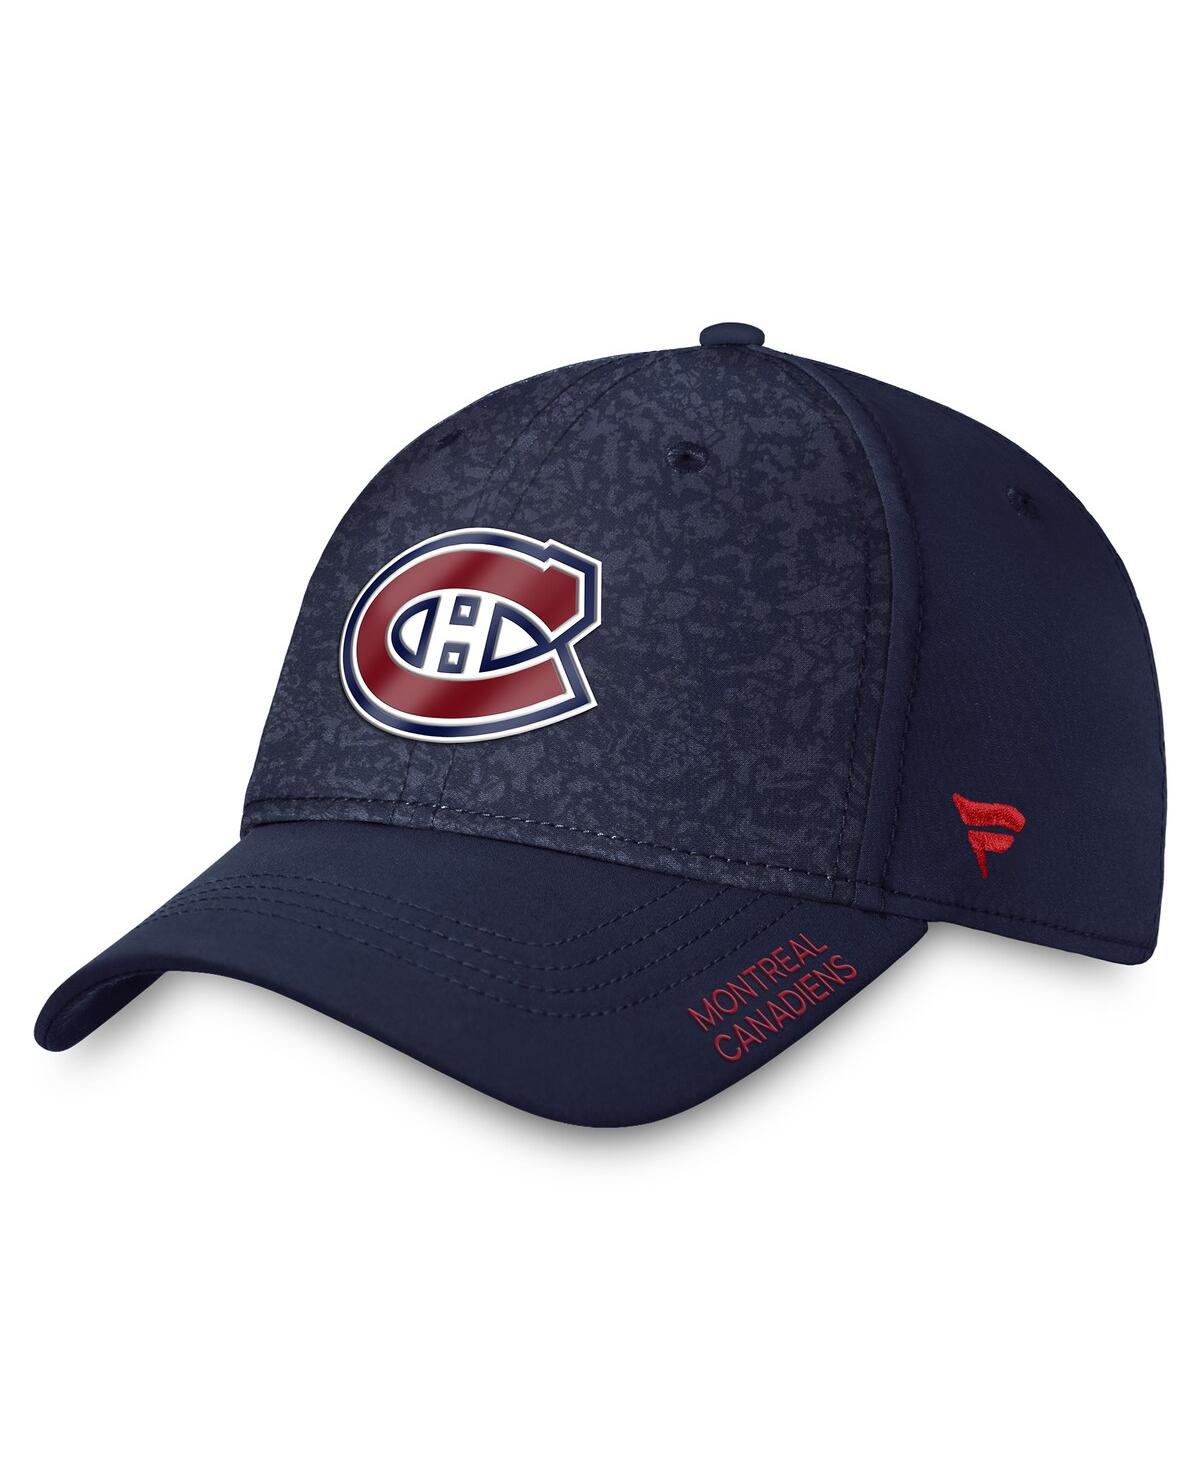 Men's Fanatics Navy Montreal Canadiens Authentic Pro Rink Flex Hat - Navy